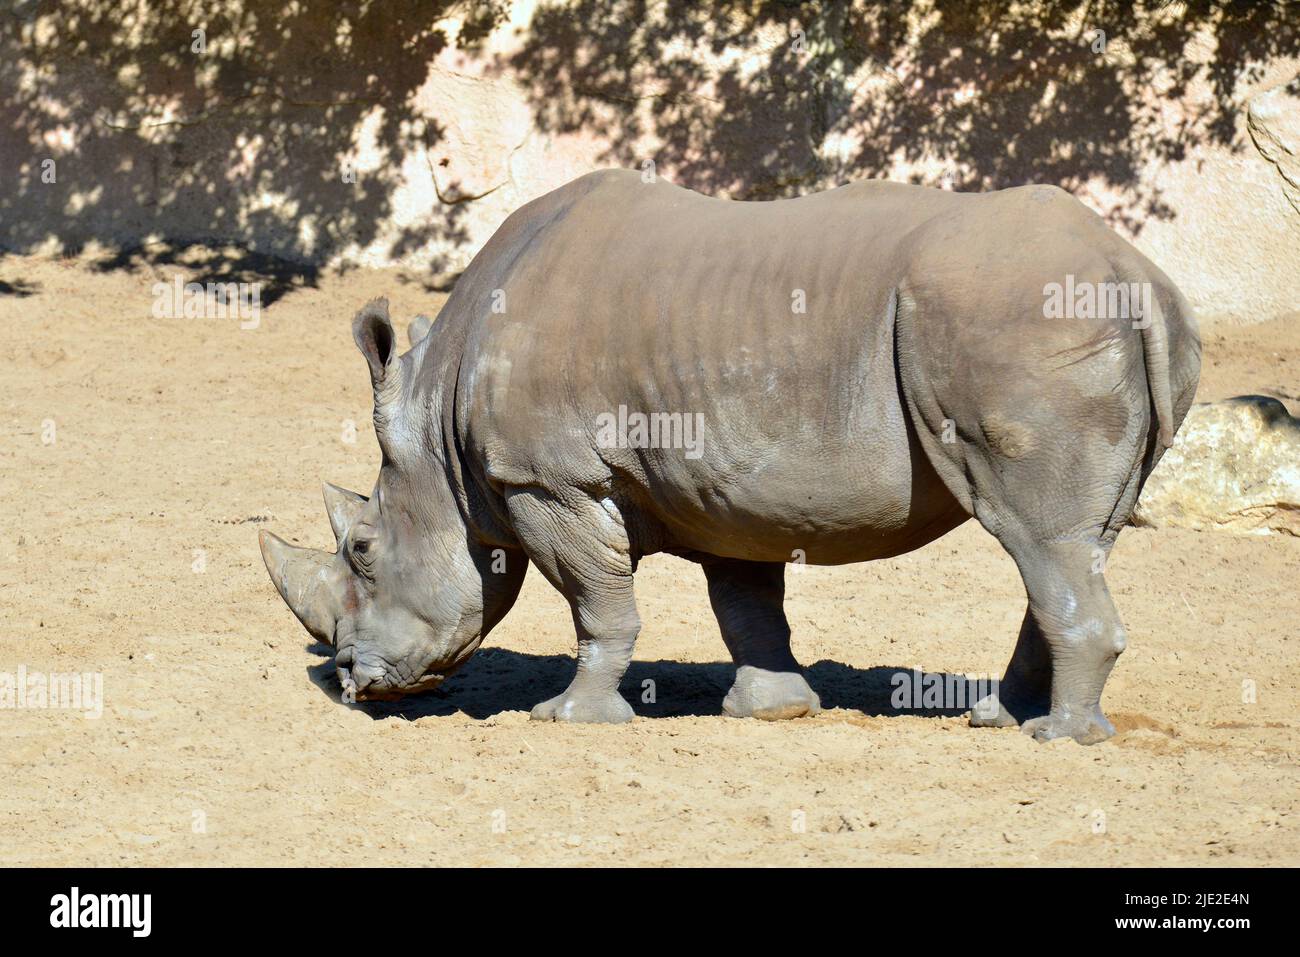 Rinocerontes blancos o rinocerontes de labio cuadrado (Ceratotherium simum) sobre arena Foto de stock